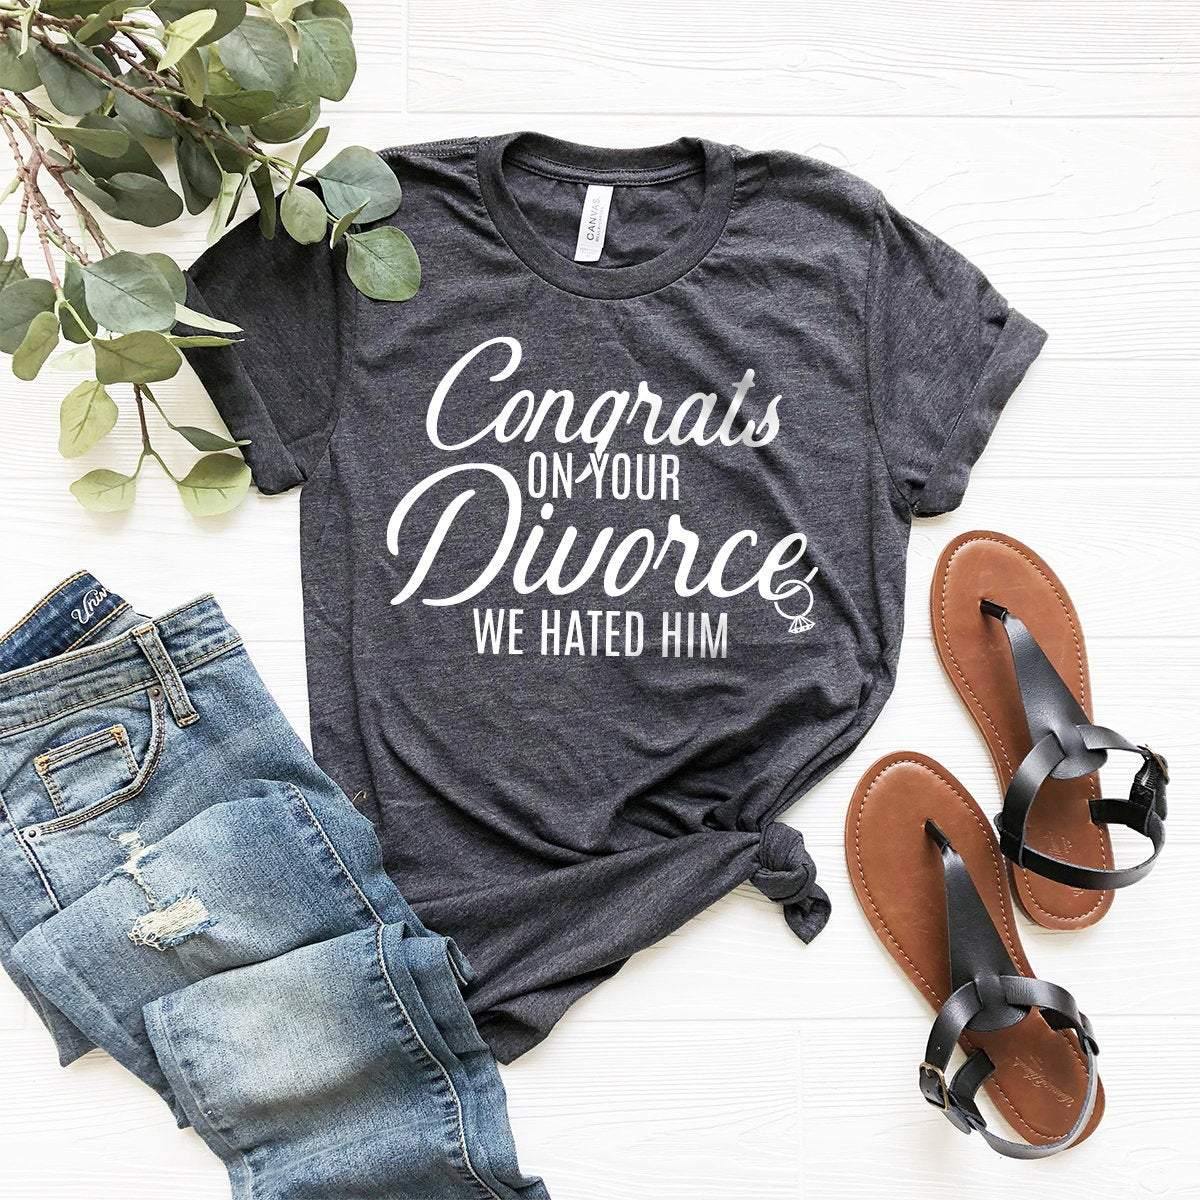 divorce party shirts